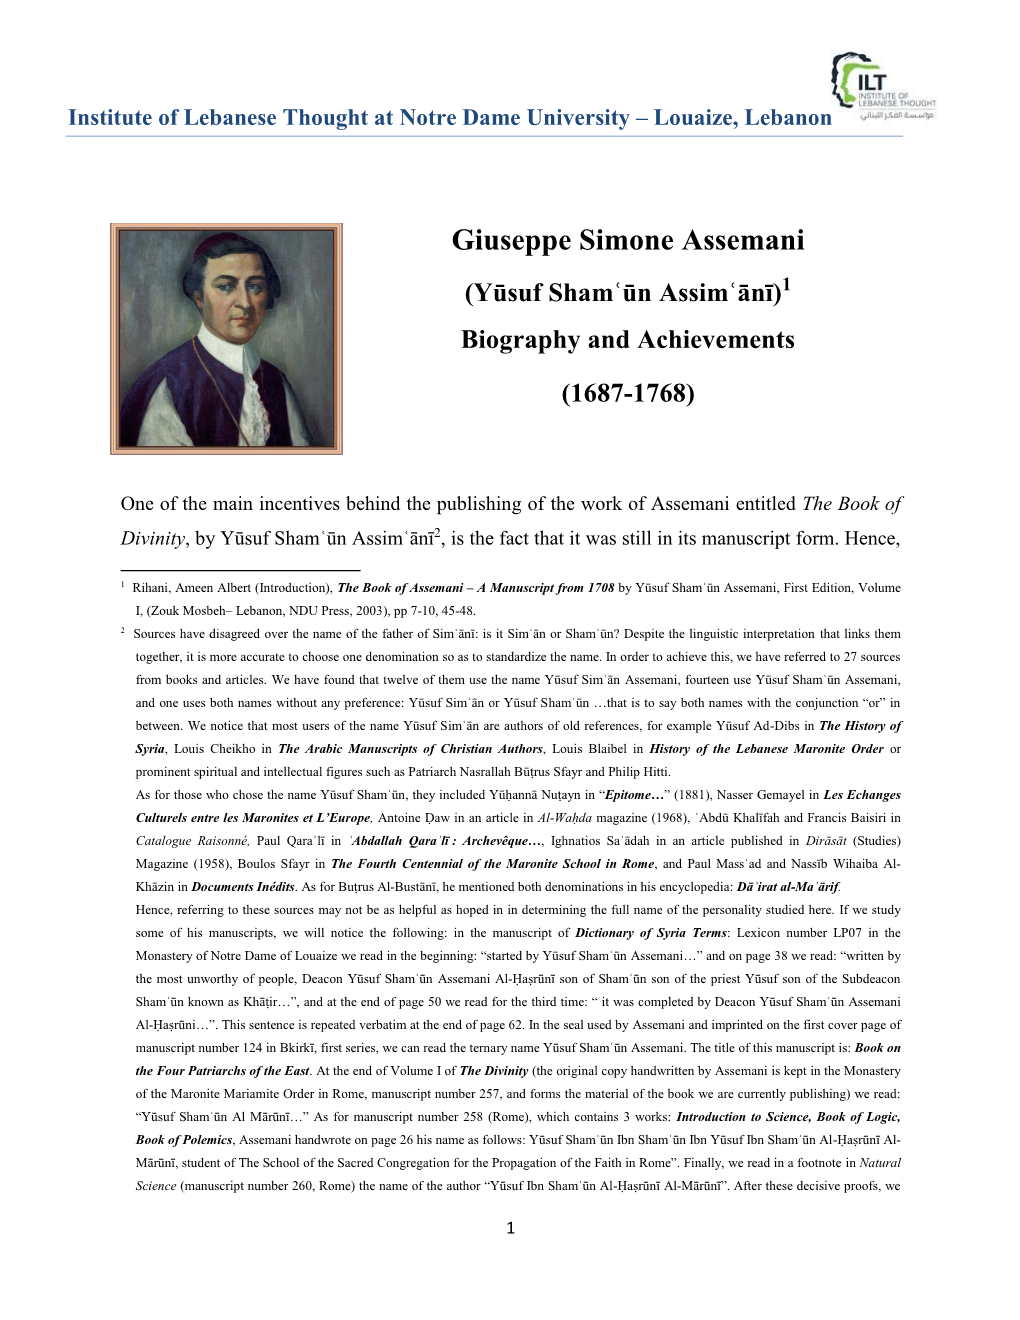 Giuseppe Simone Assemani (Yūsuf Shamʿūn Assimʿānī)1 Biography and Achievements